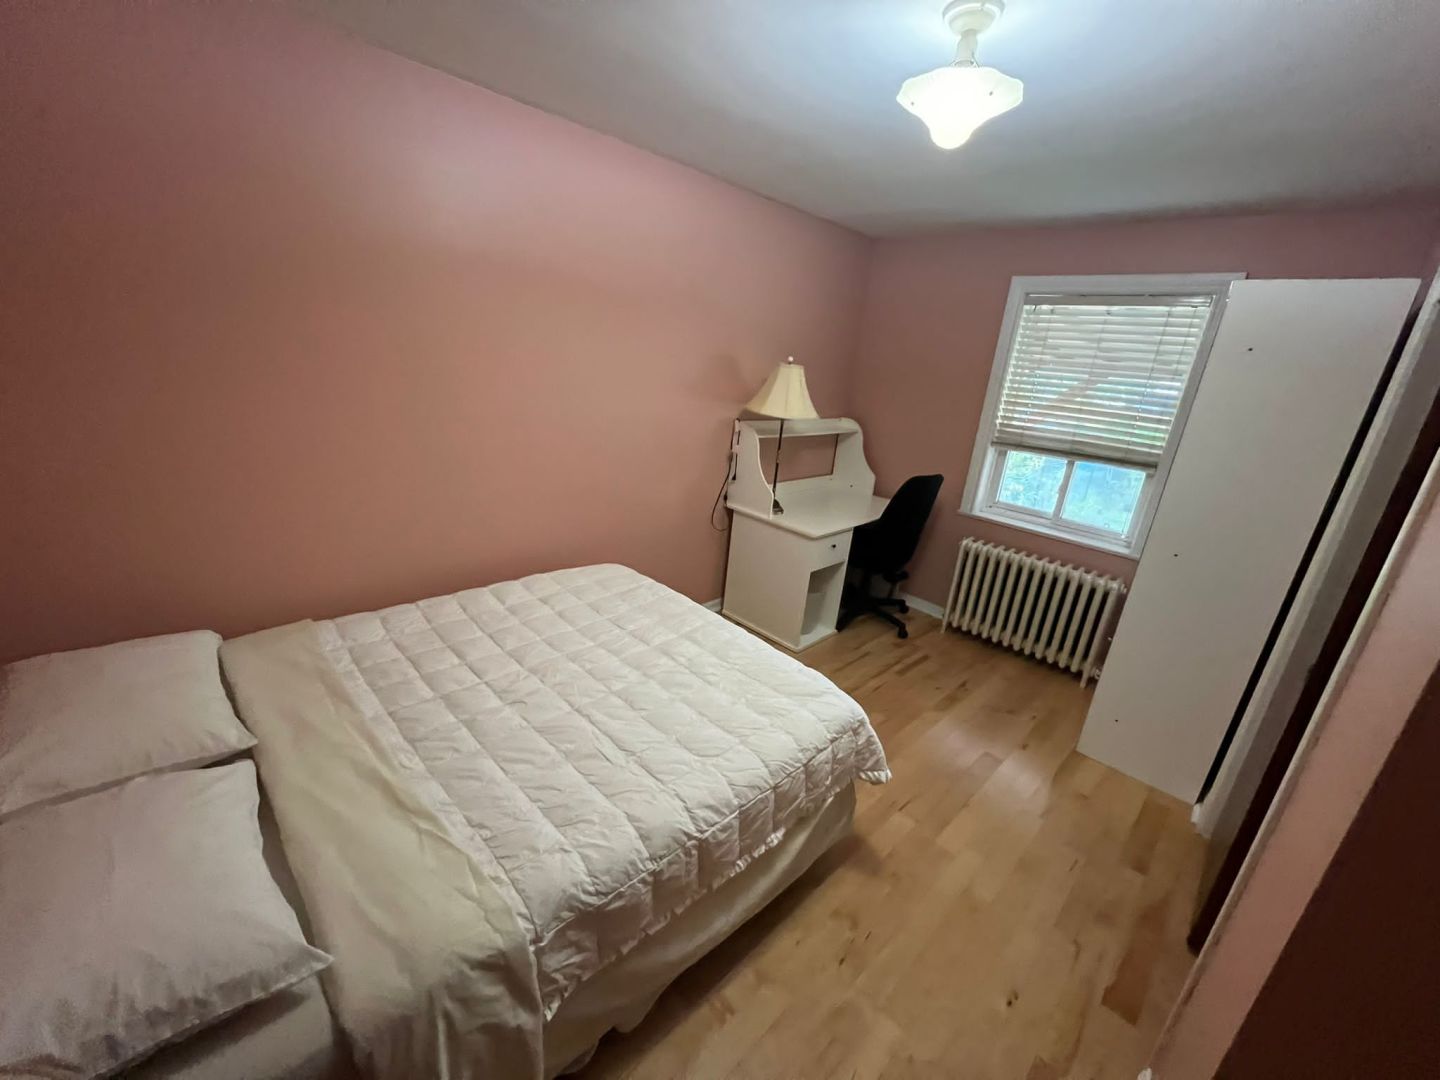 Premium Homestay Room - Whitmore Ave, Toronto room for rent 109